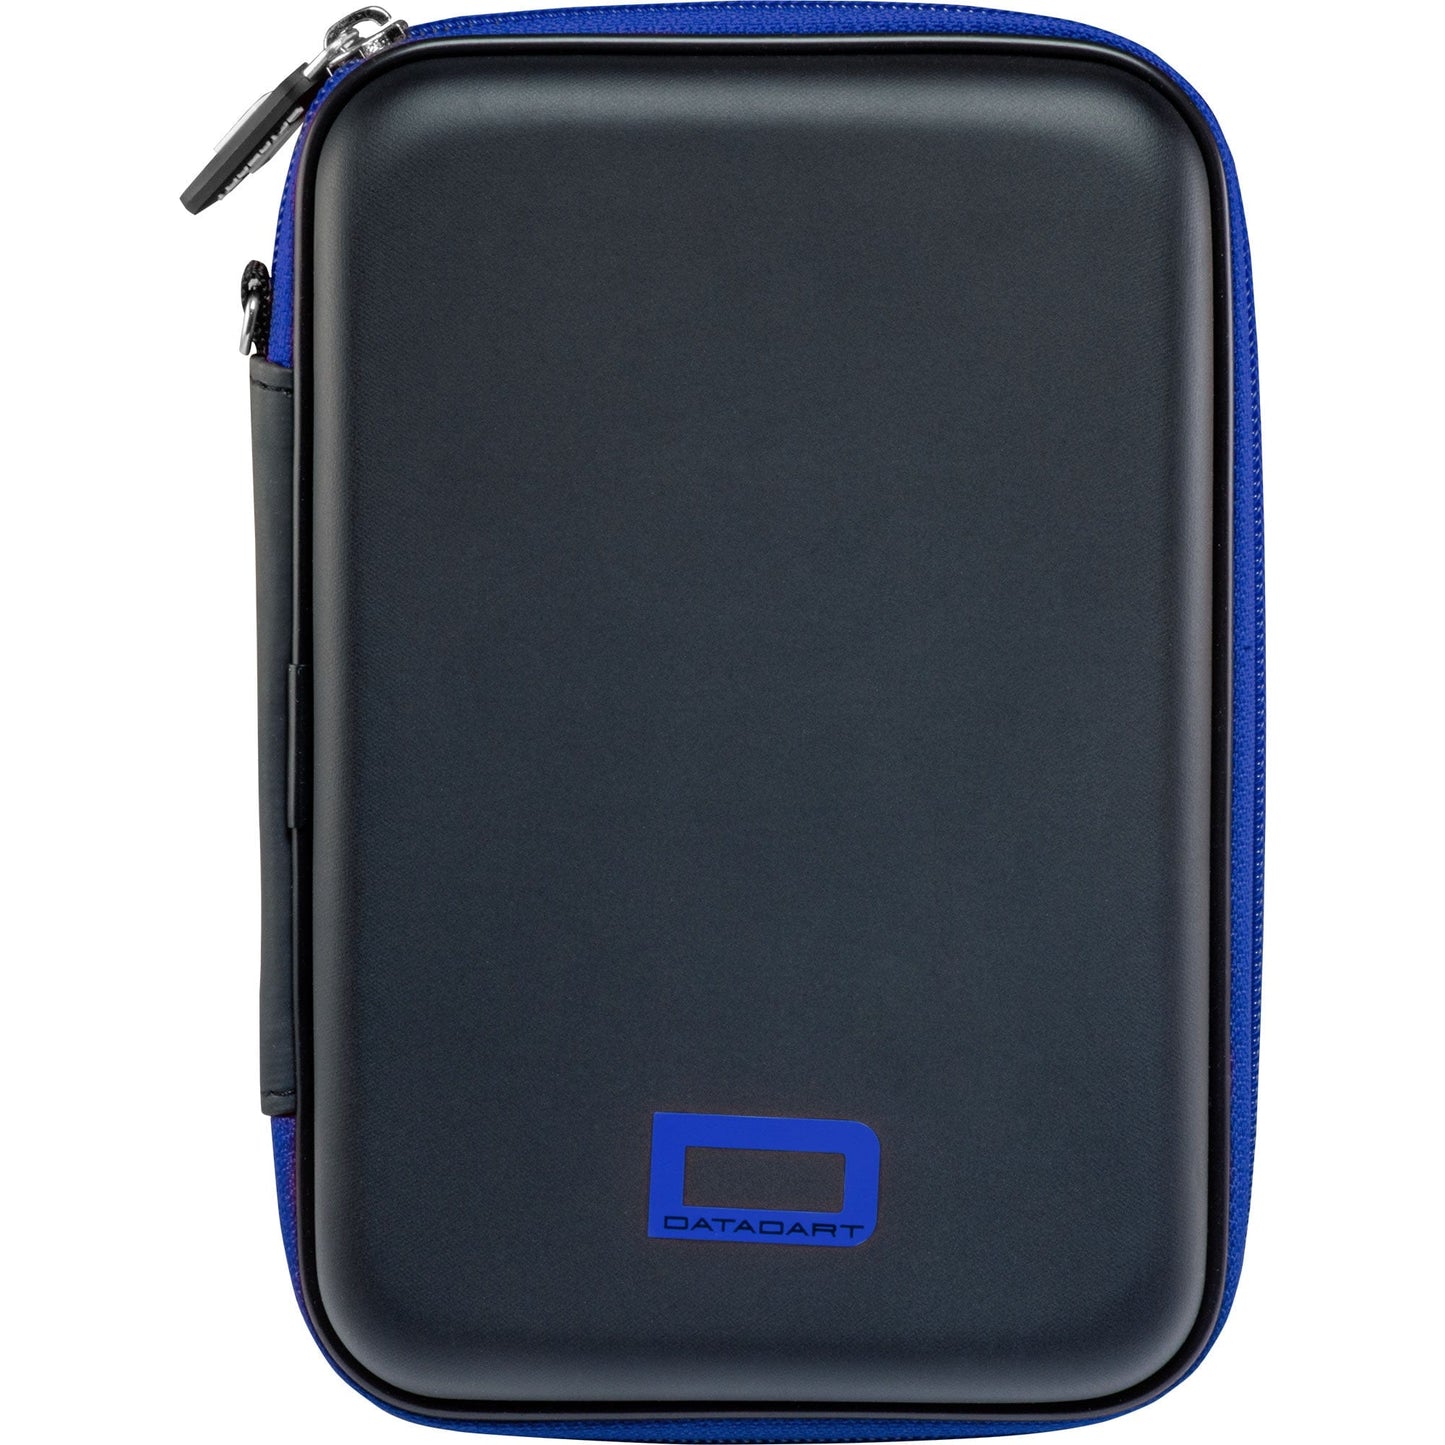 Datadart ProPac MAX Darts Case - Large EVA Case - Holds 2 Fully Assembled Sets Blue